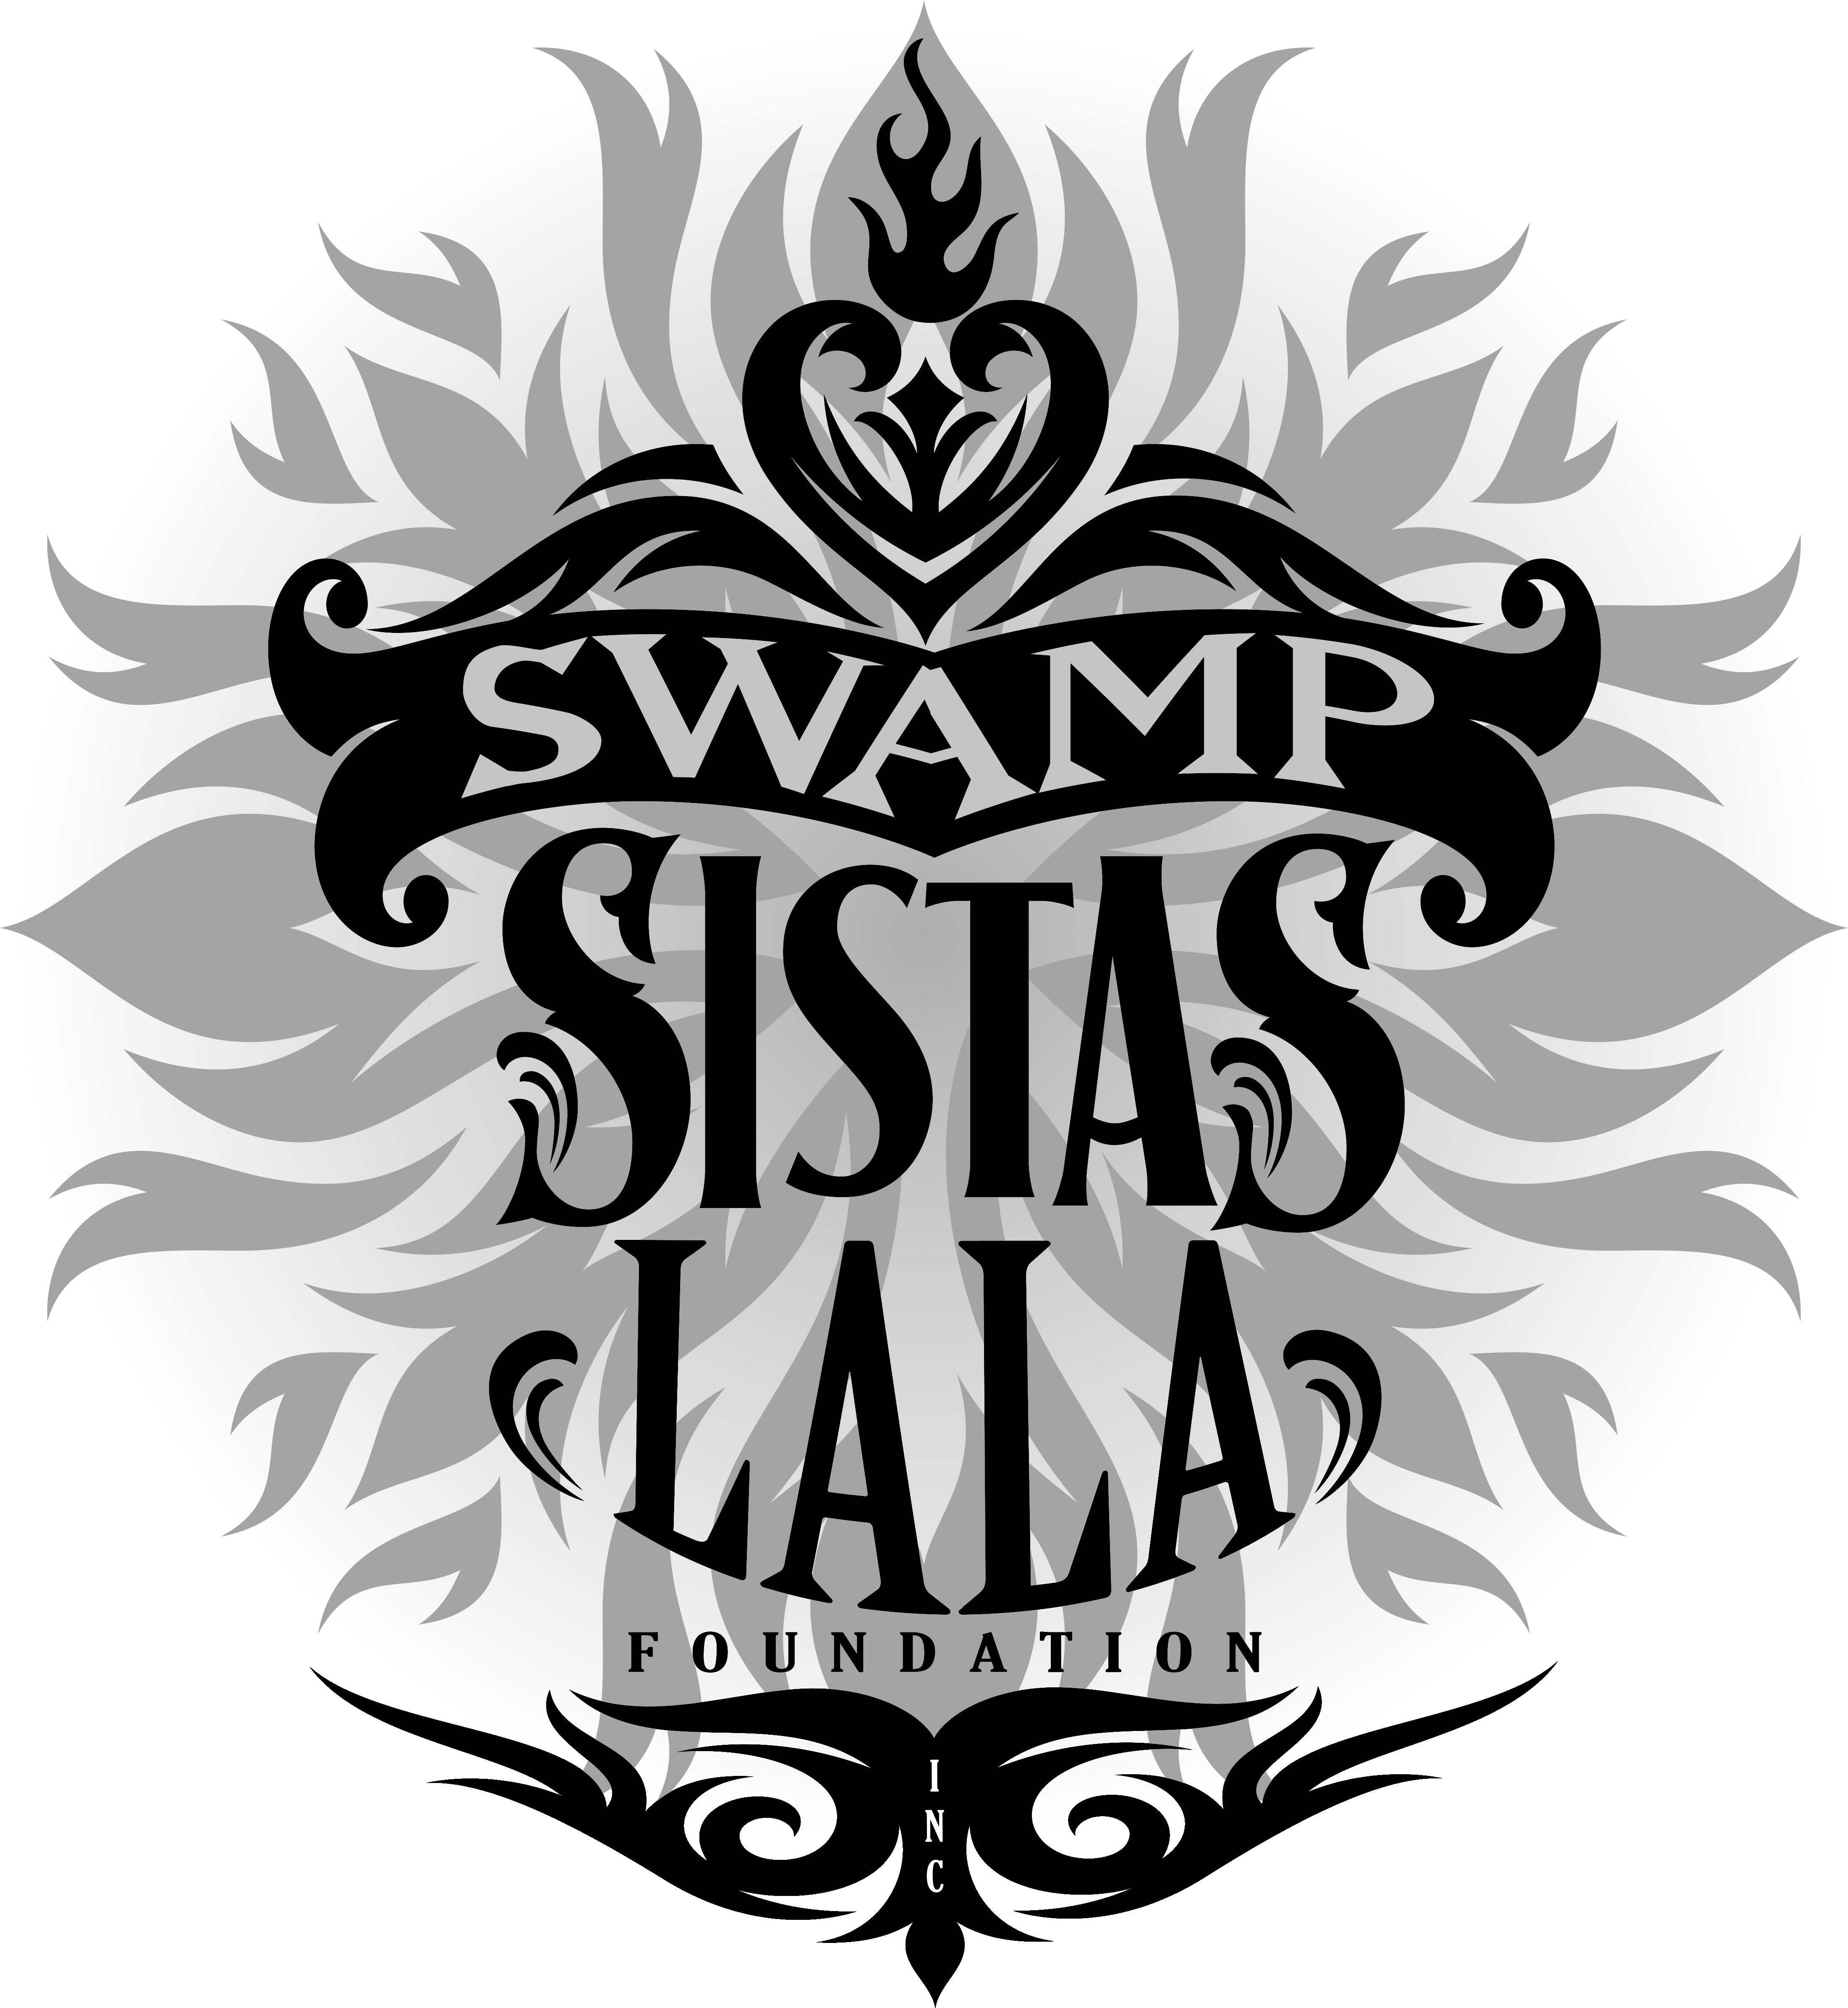 Swamp Sistas LaLa